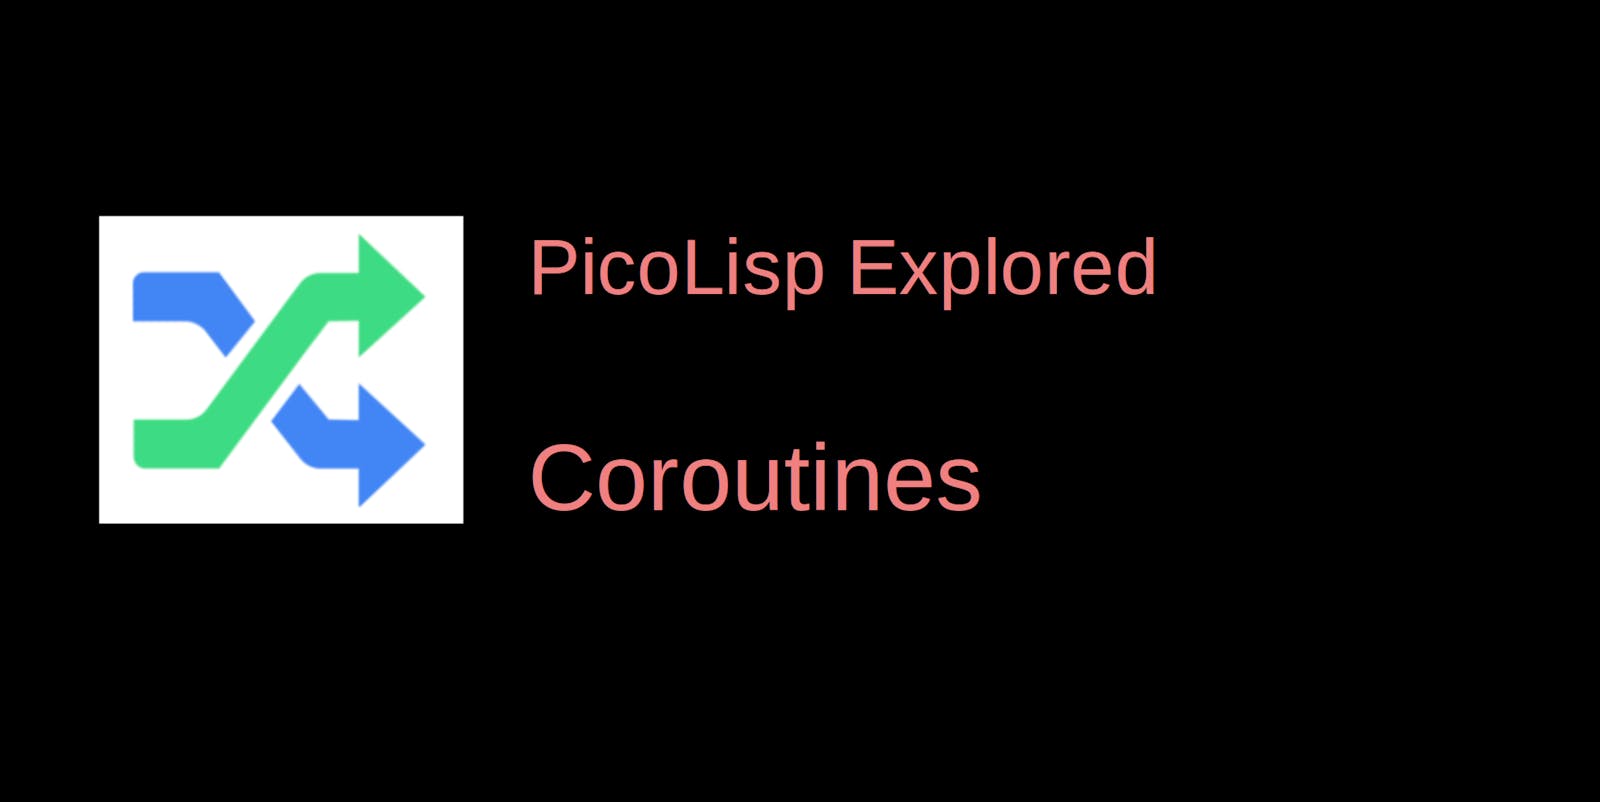 PicoLixp Explored: On Coroutines